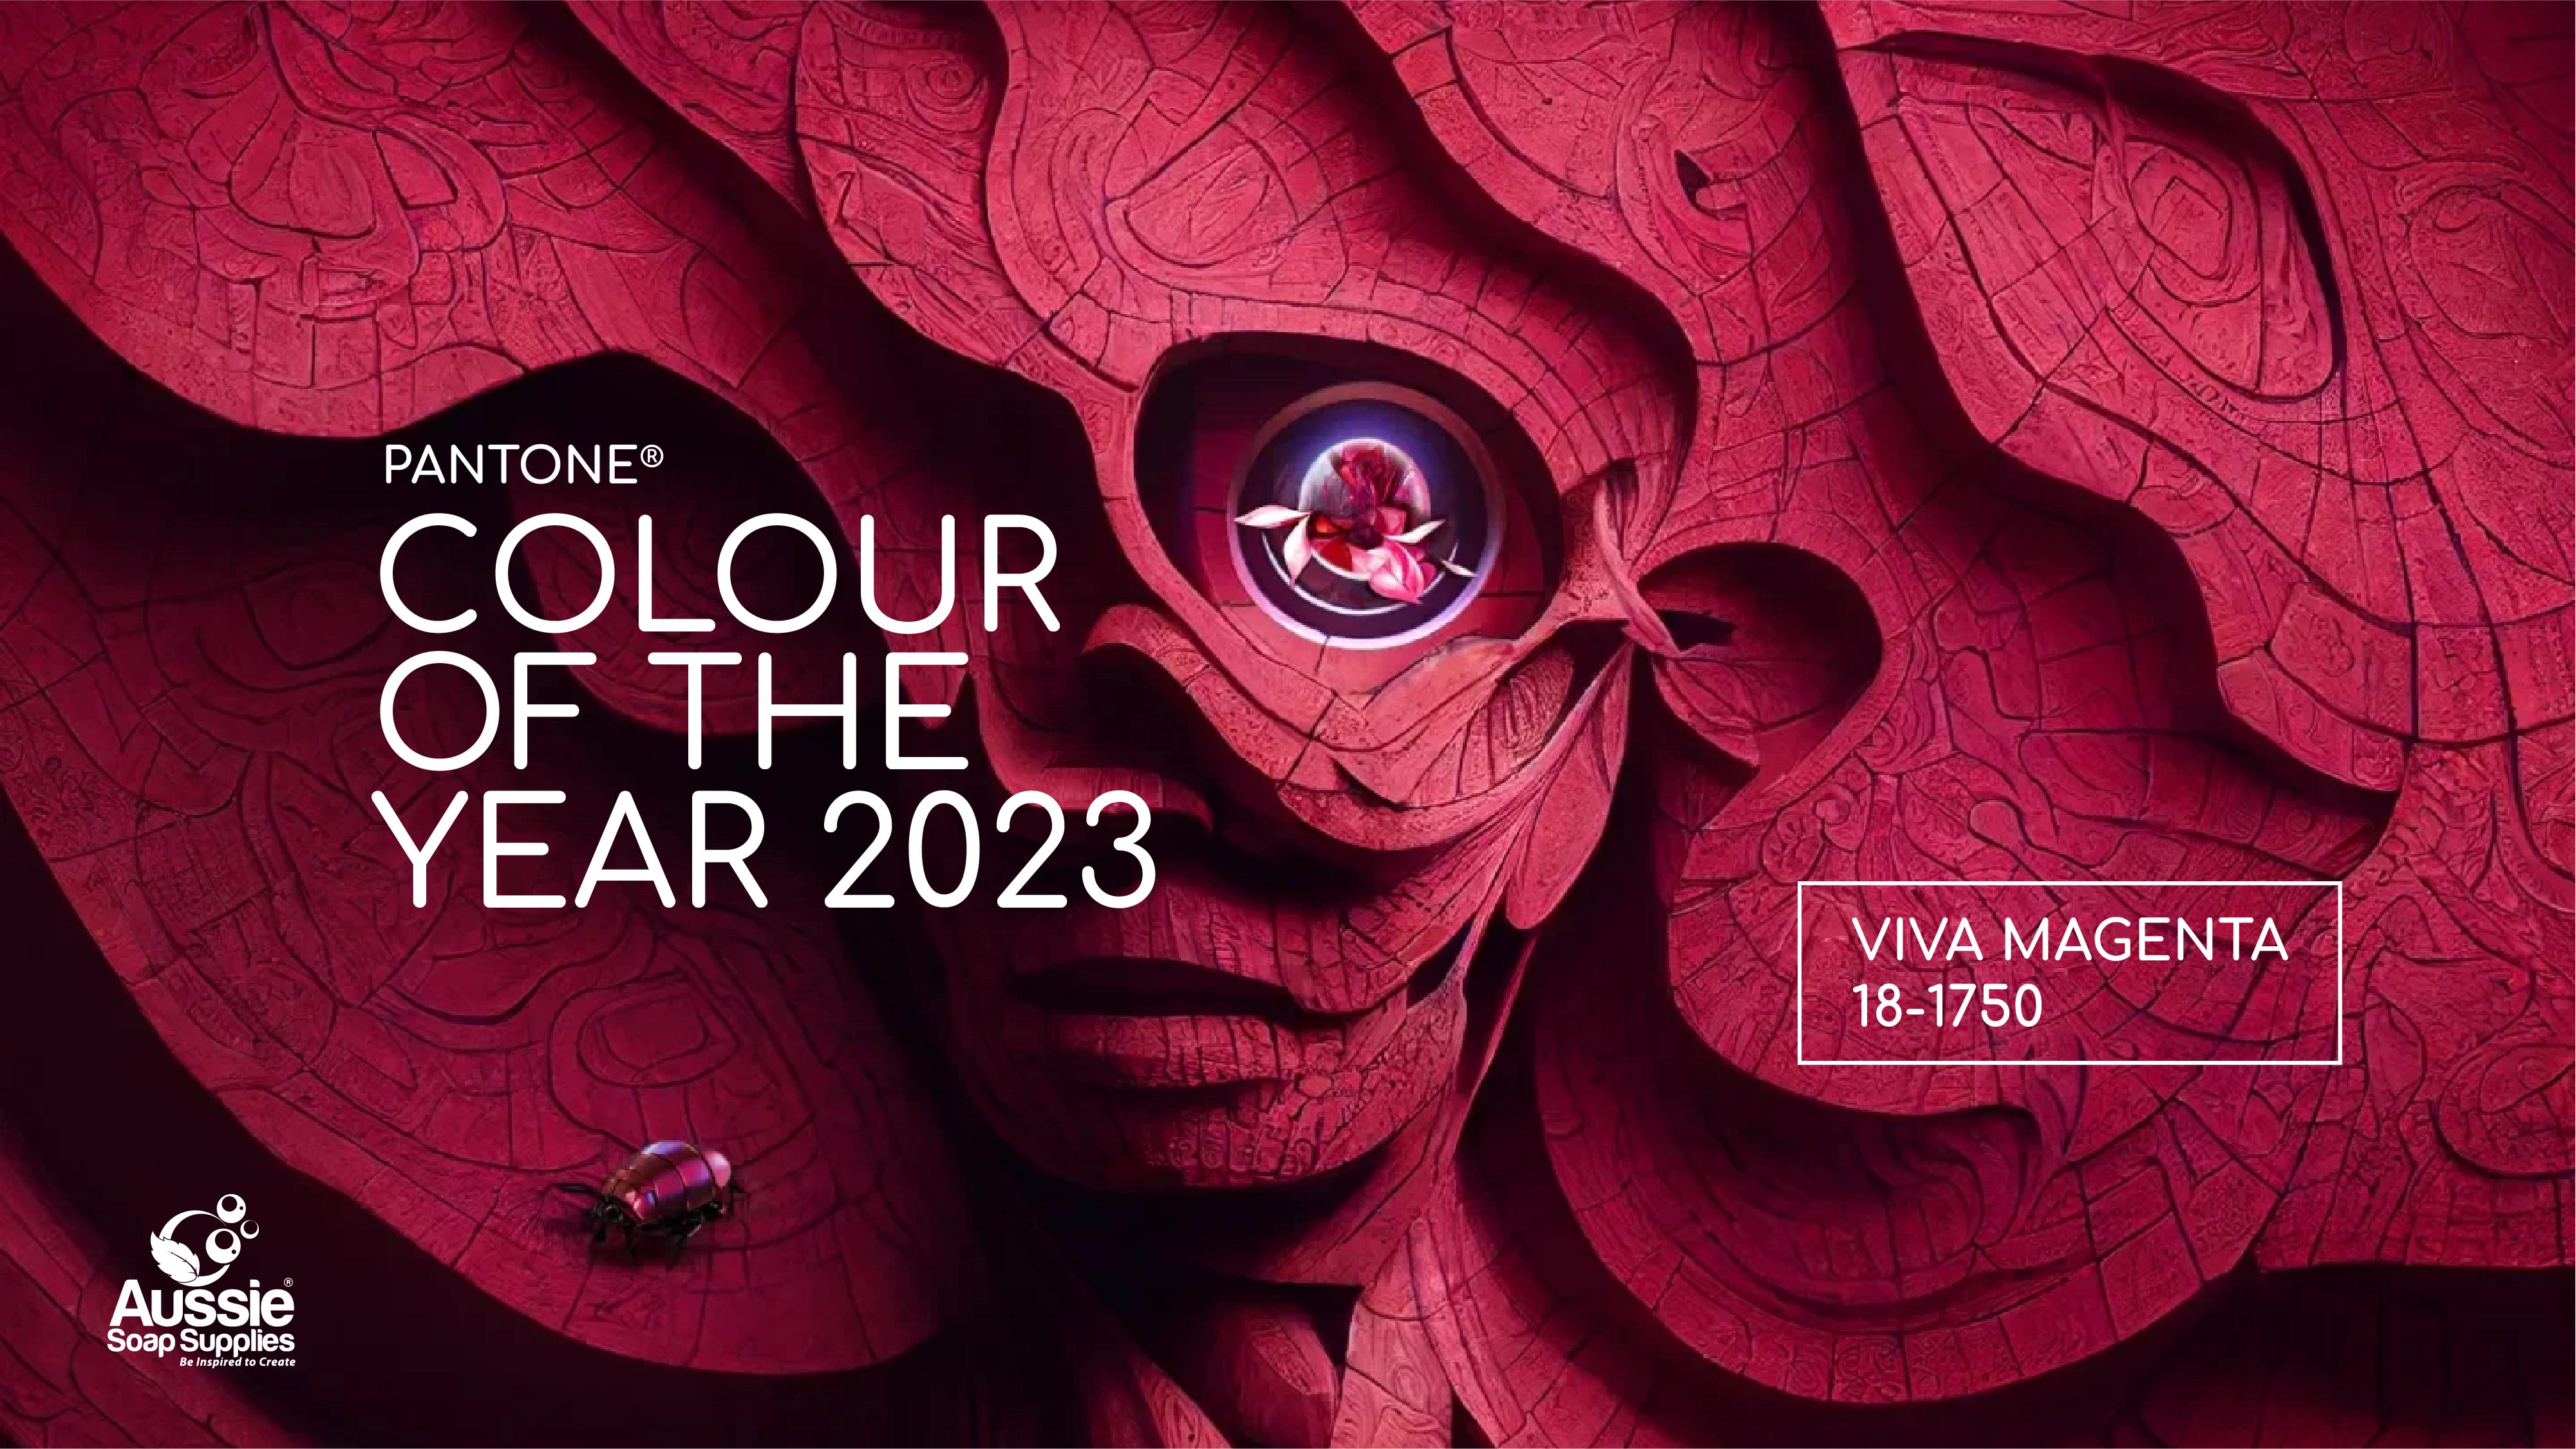 Pantone names Viva Magenta as colour of the year 2023